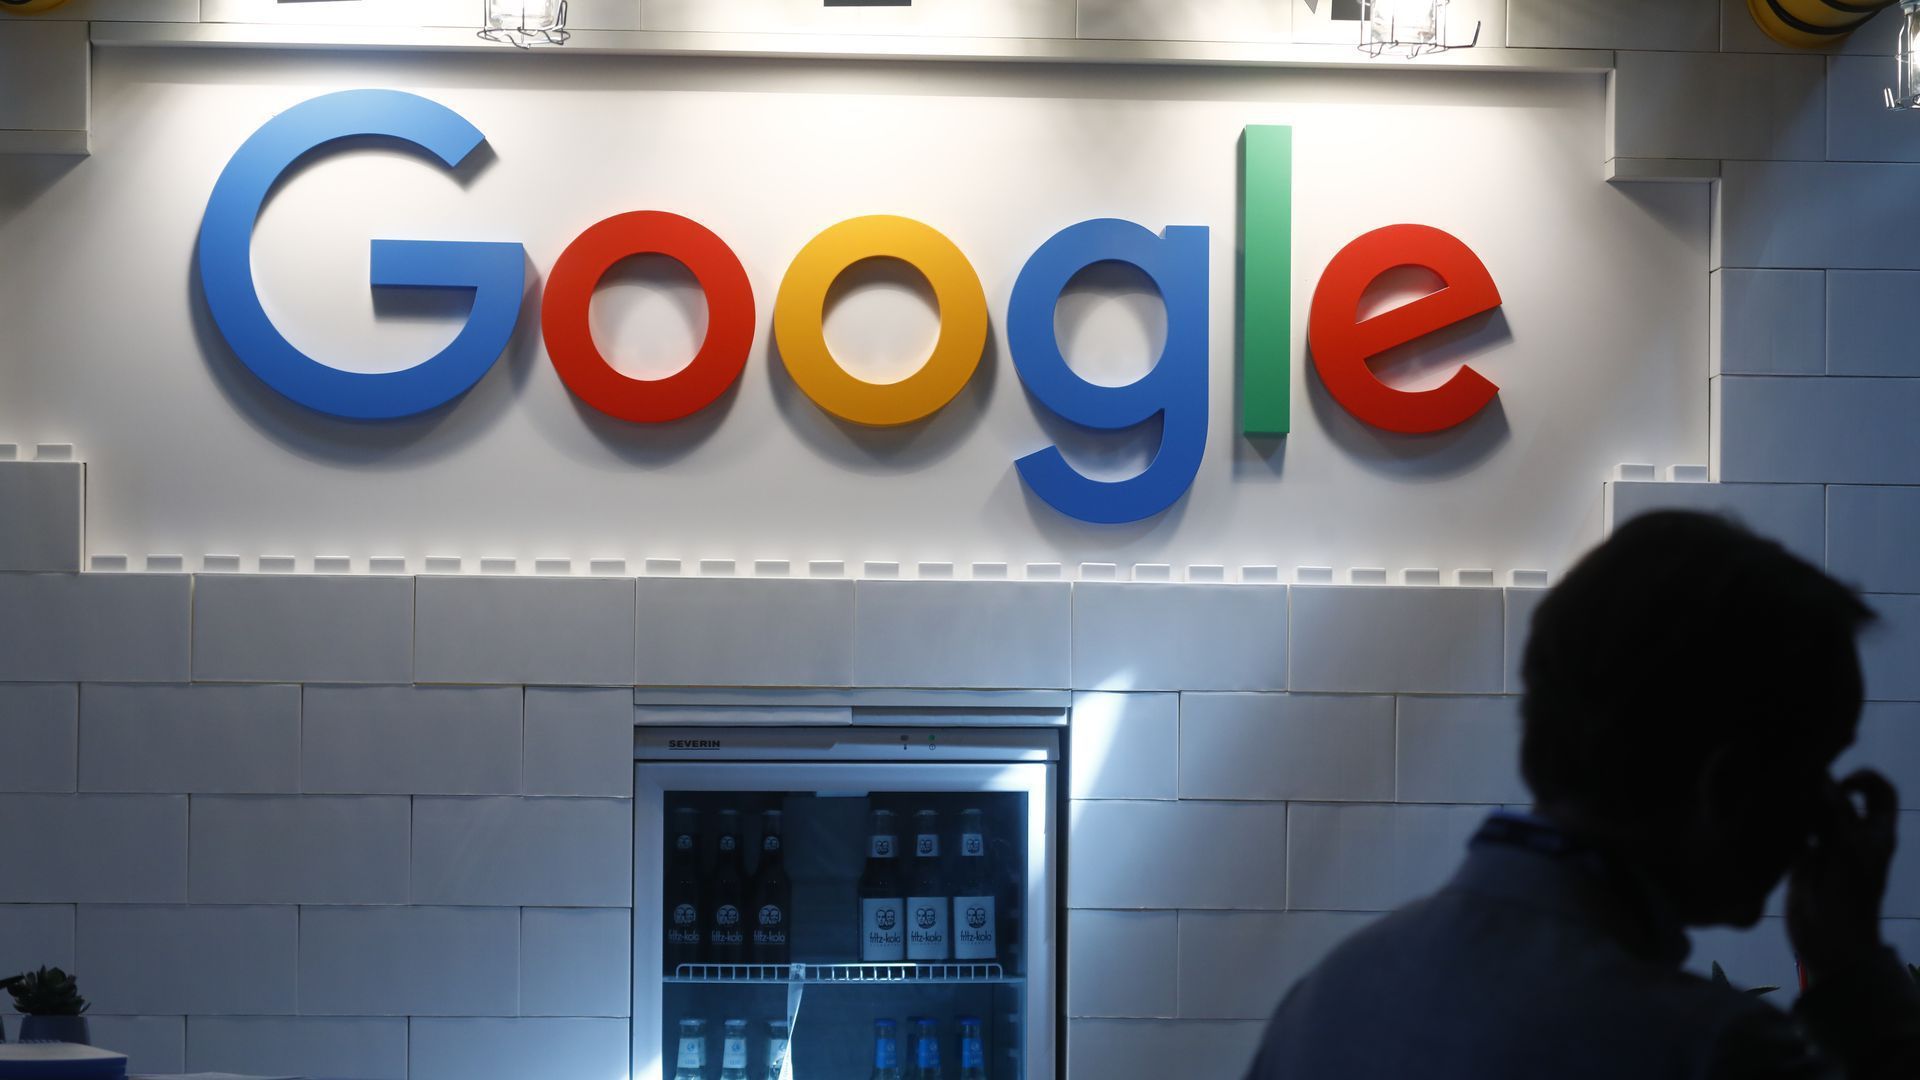 Google logo on wall over a soft-drink fridge